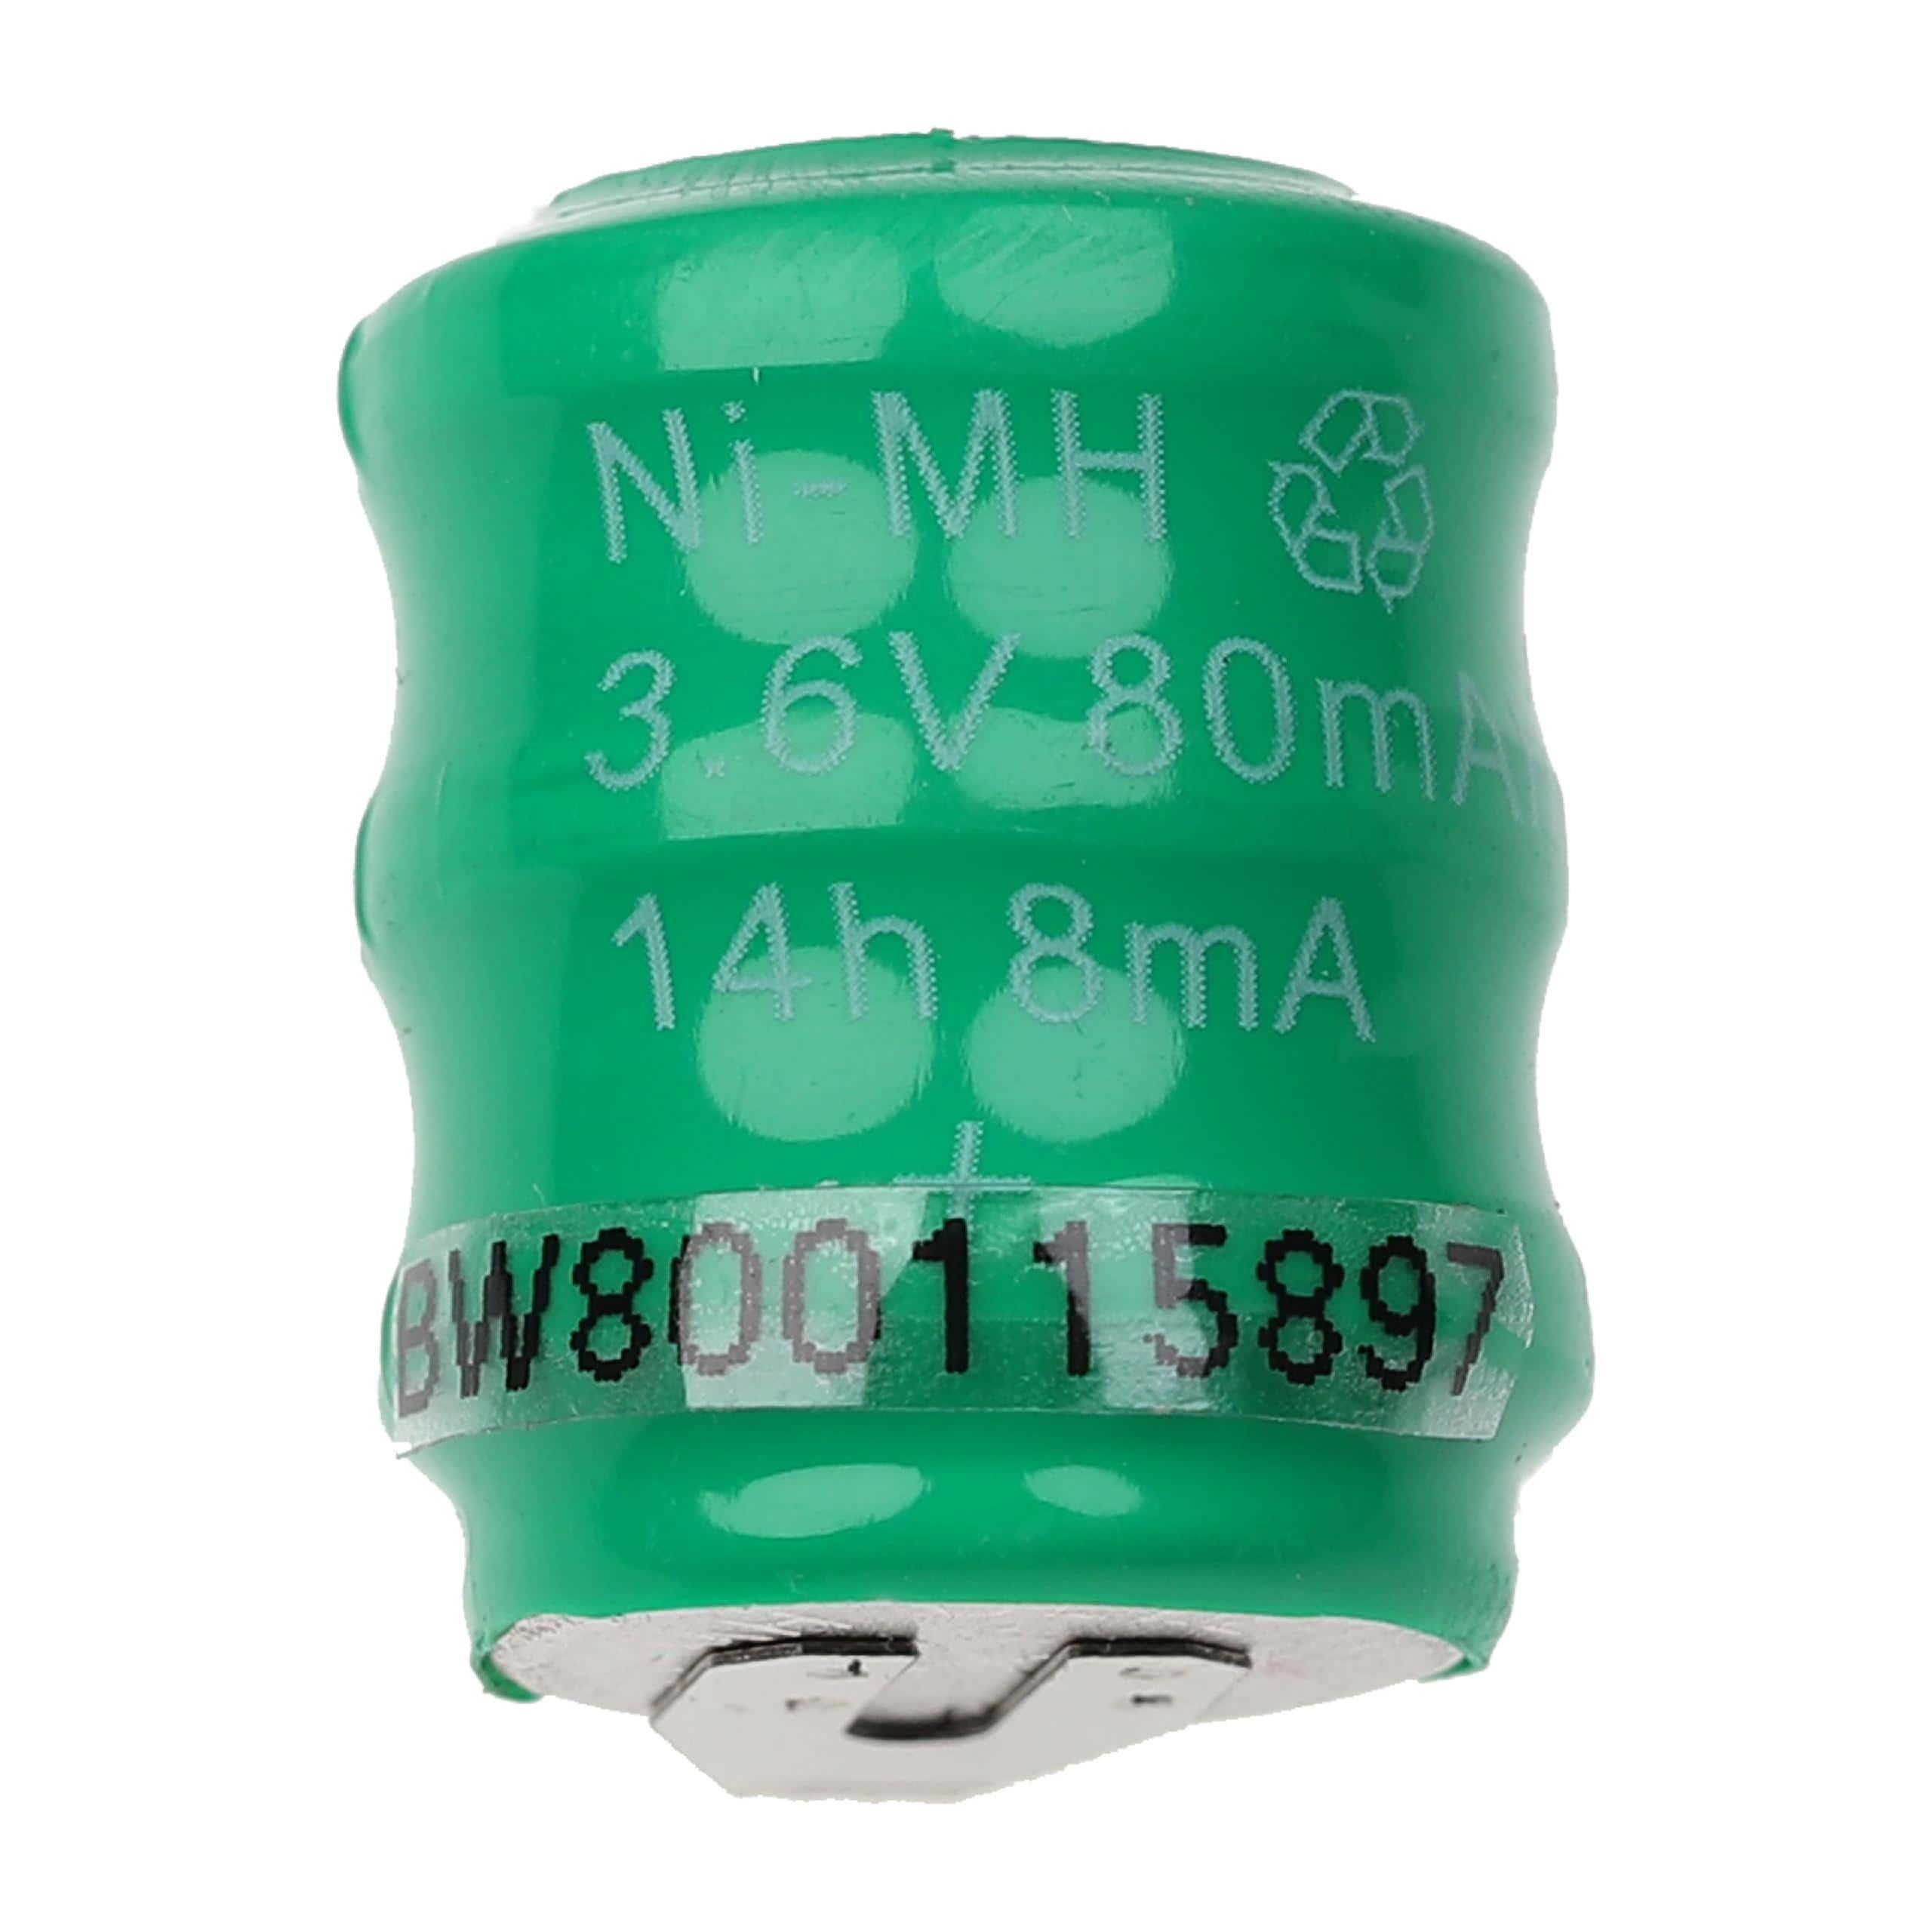 Akumulator guzikowy (3x ogniwo) typ 3/V80H 2 pin do modeli, lamp solarnych itp. - 80 mAh, 3,6 V, NiMH